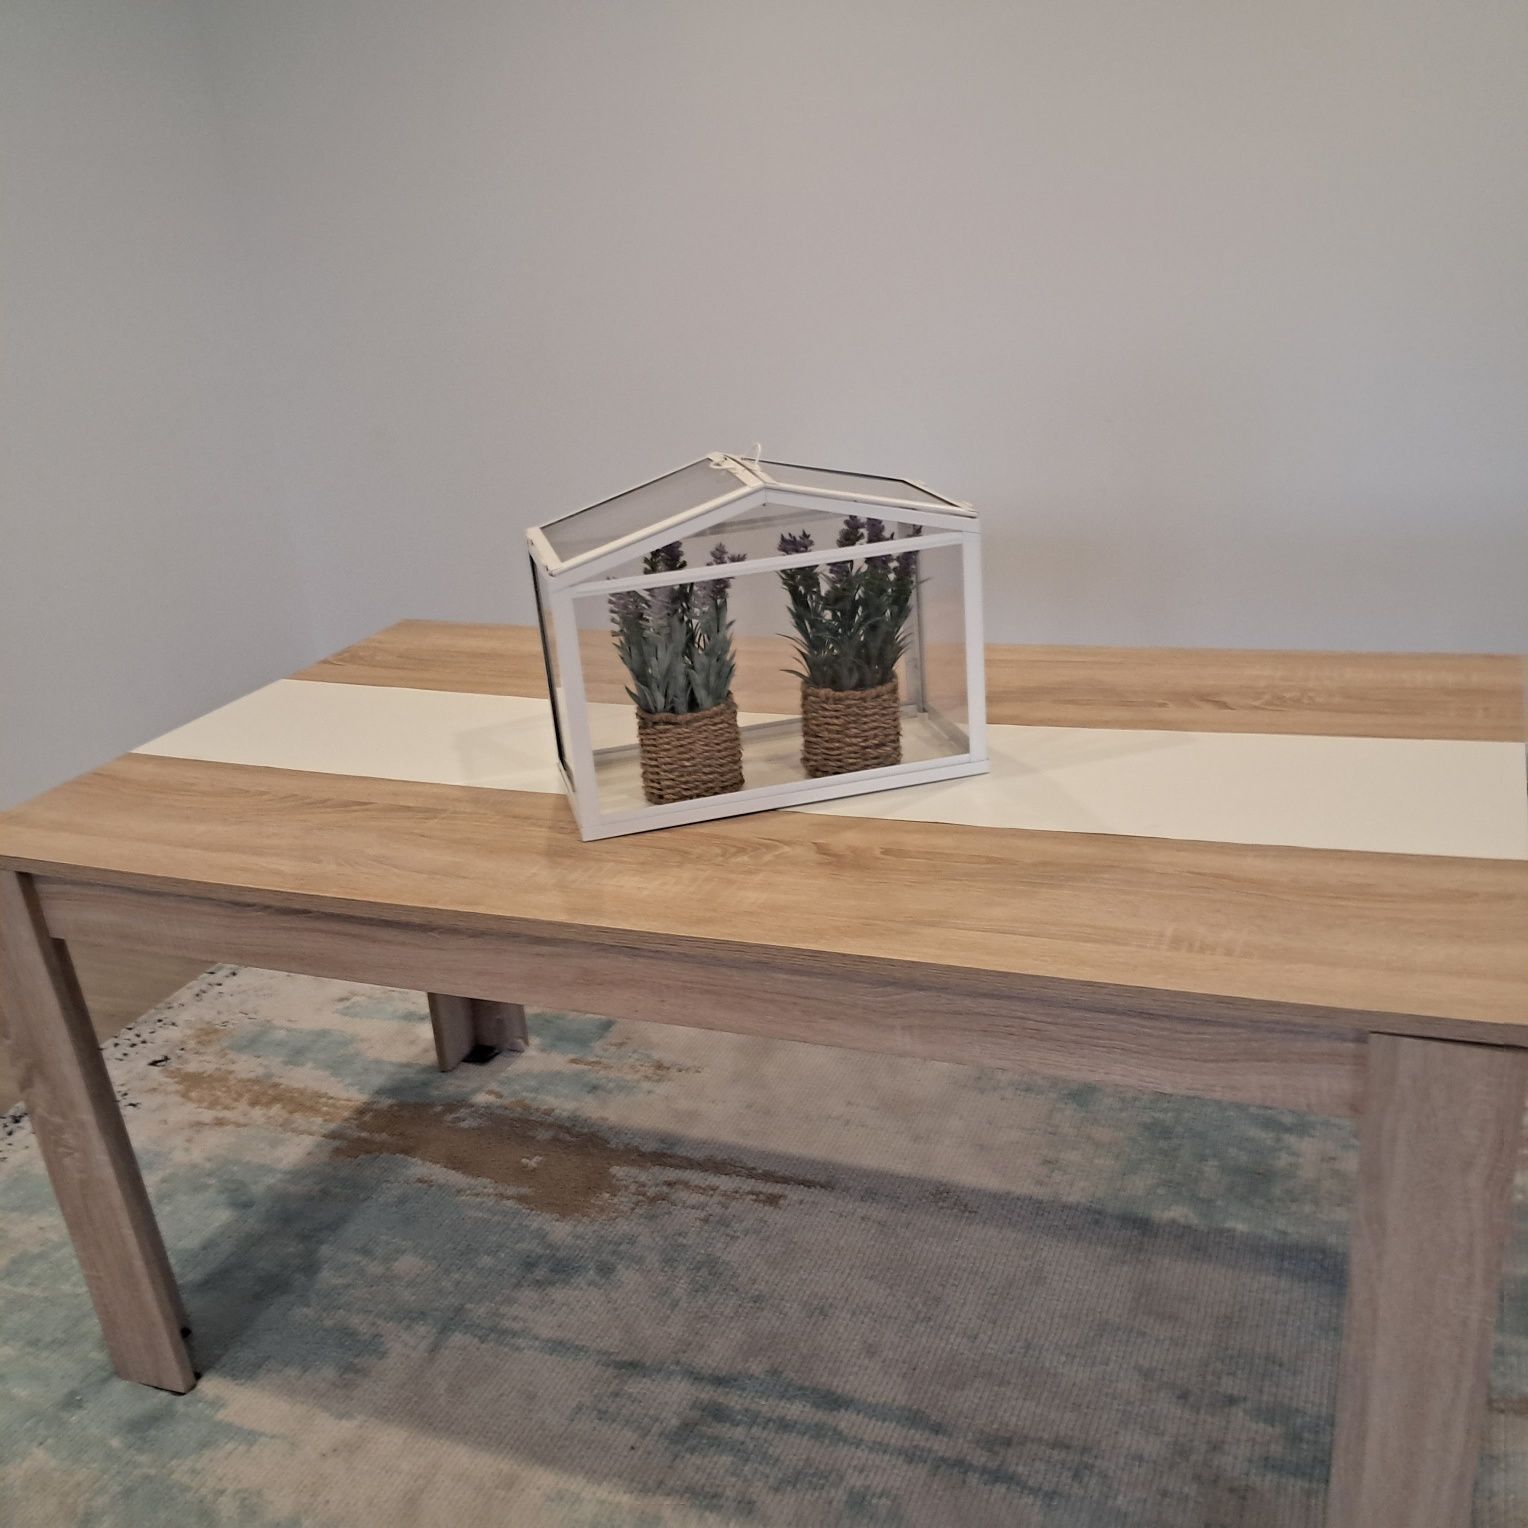 Mesa jantar madeira